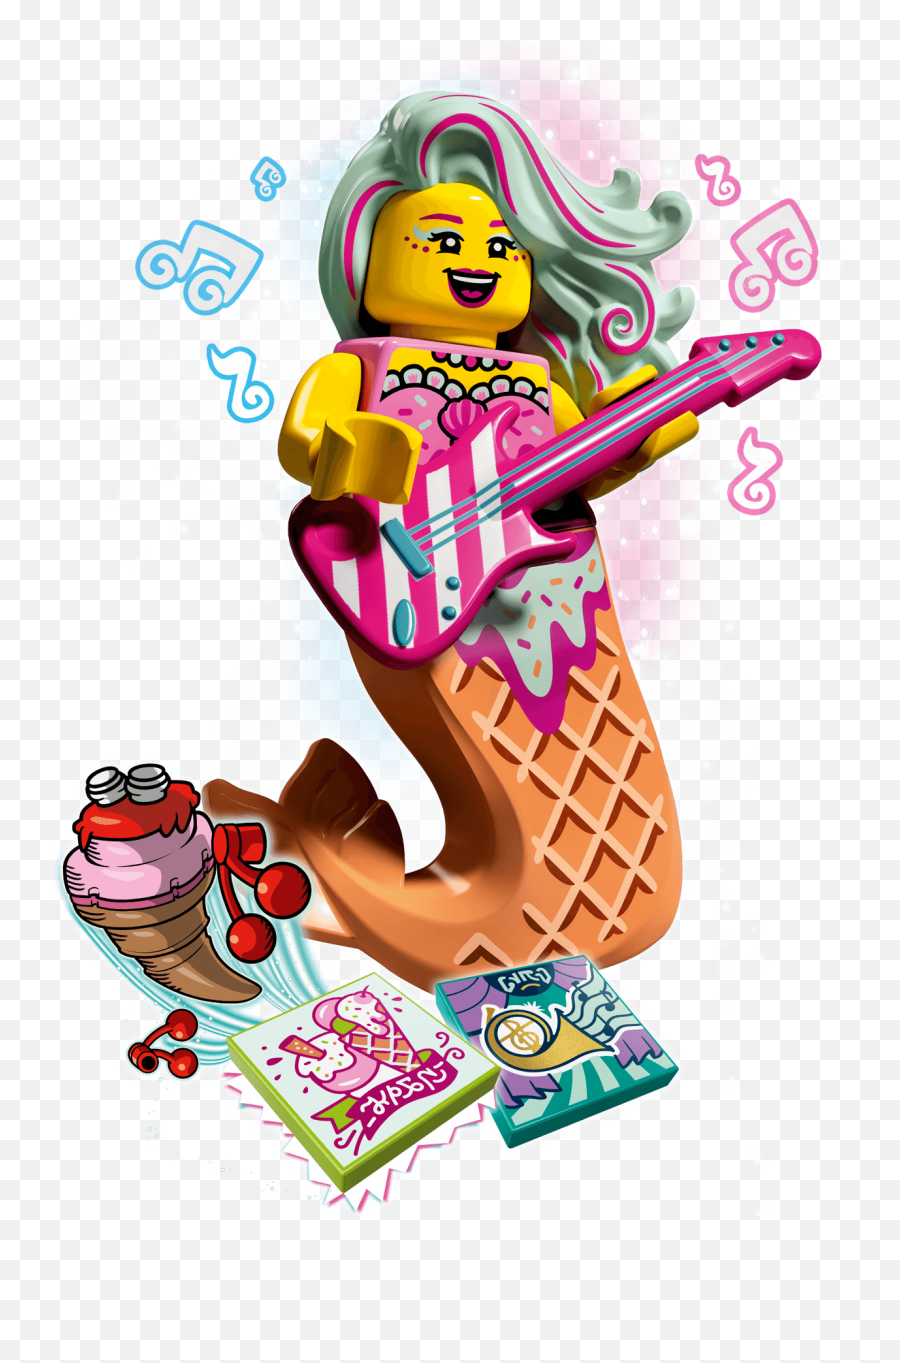 Candy Mermaid Beatbox 43102 Vidiyo Buy Online At The Official Lego Shop Gb - Lego Vidiyo Mermaid Emoji,Mermaid Emojis Android